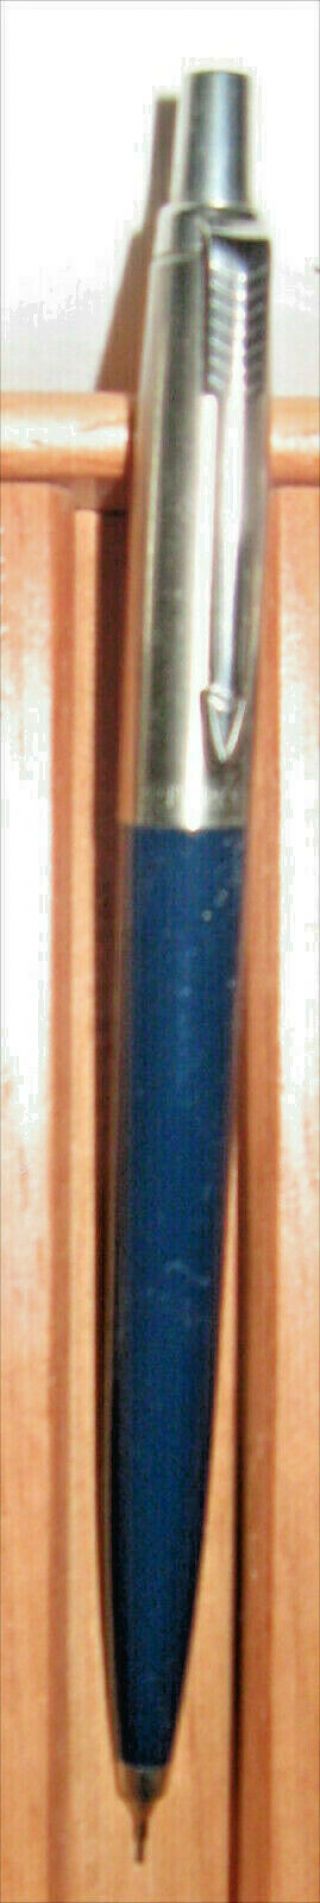 Vintage Parker Jotter Pencil - Midnight Blue Barrel - Made In Usa - 1985 3rd Qtr - T L